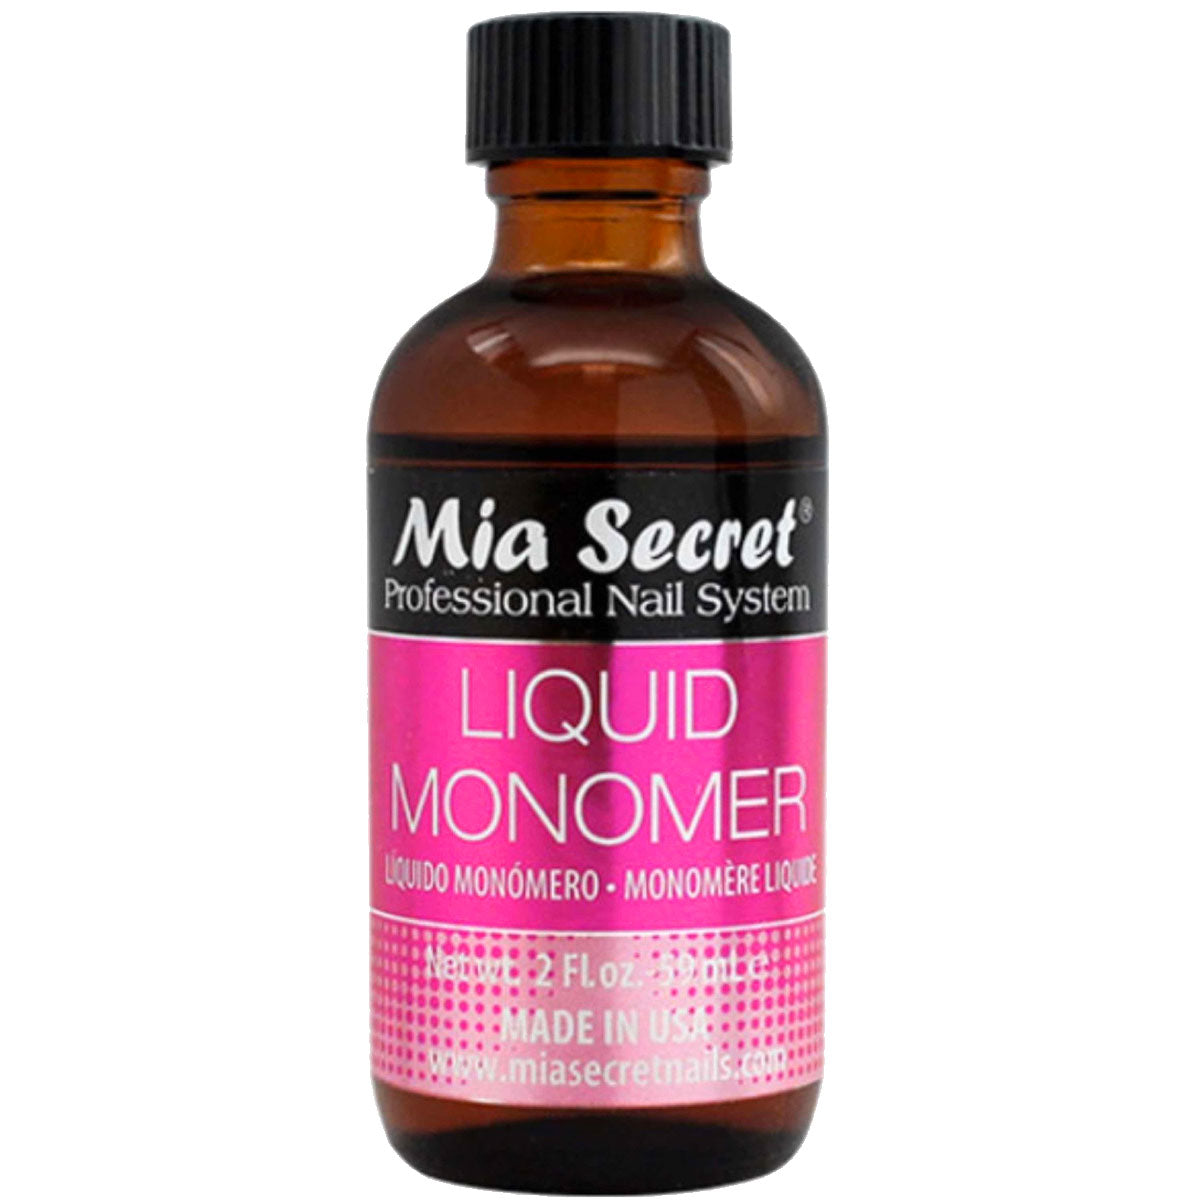 Liquido Acrilico Mia Secret 59ml monomero en Beauty Supply